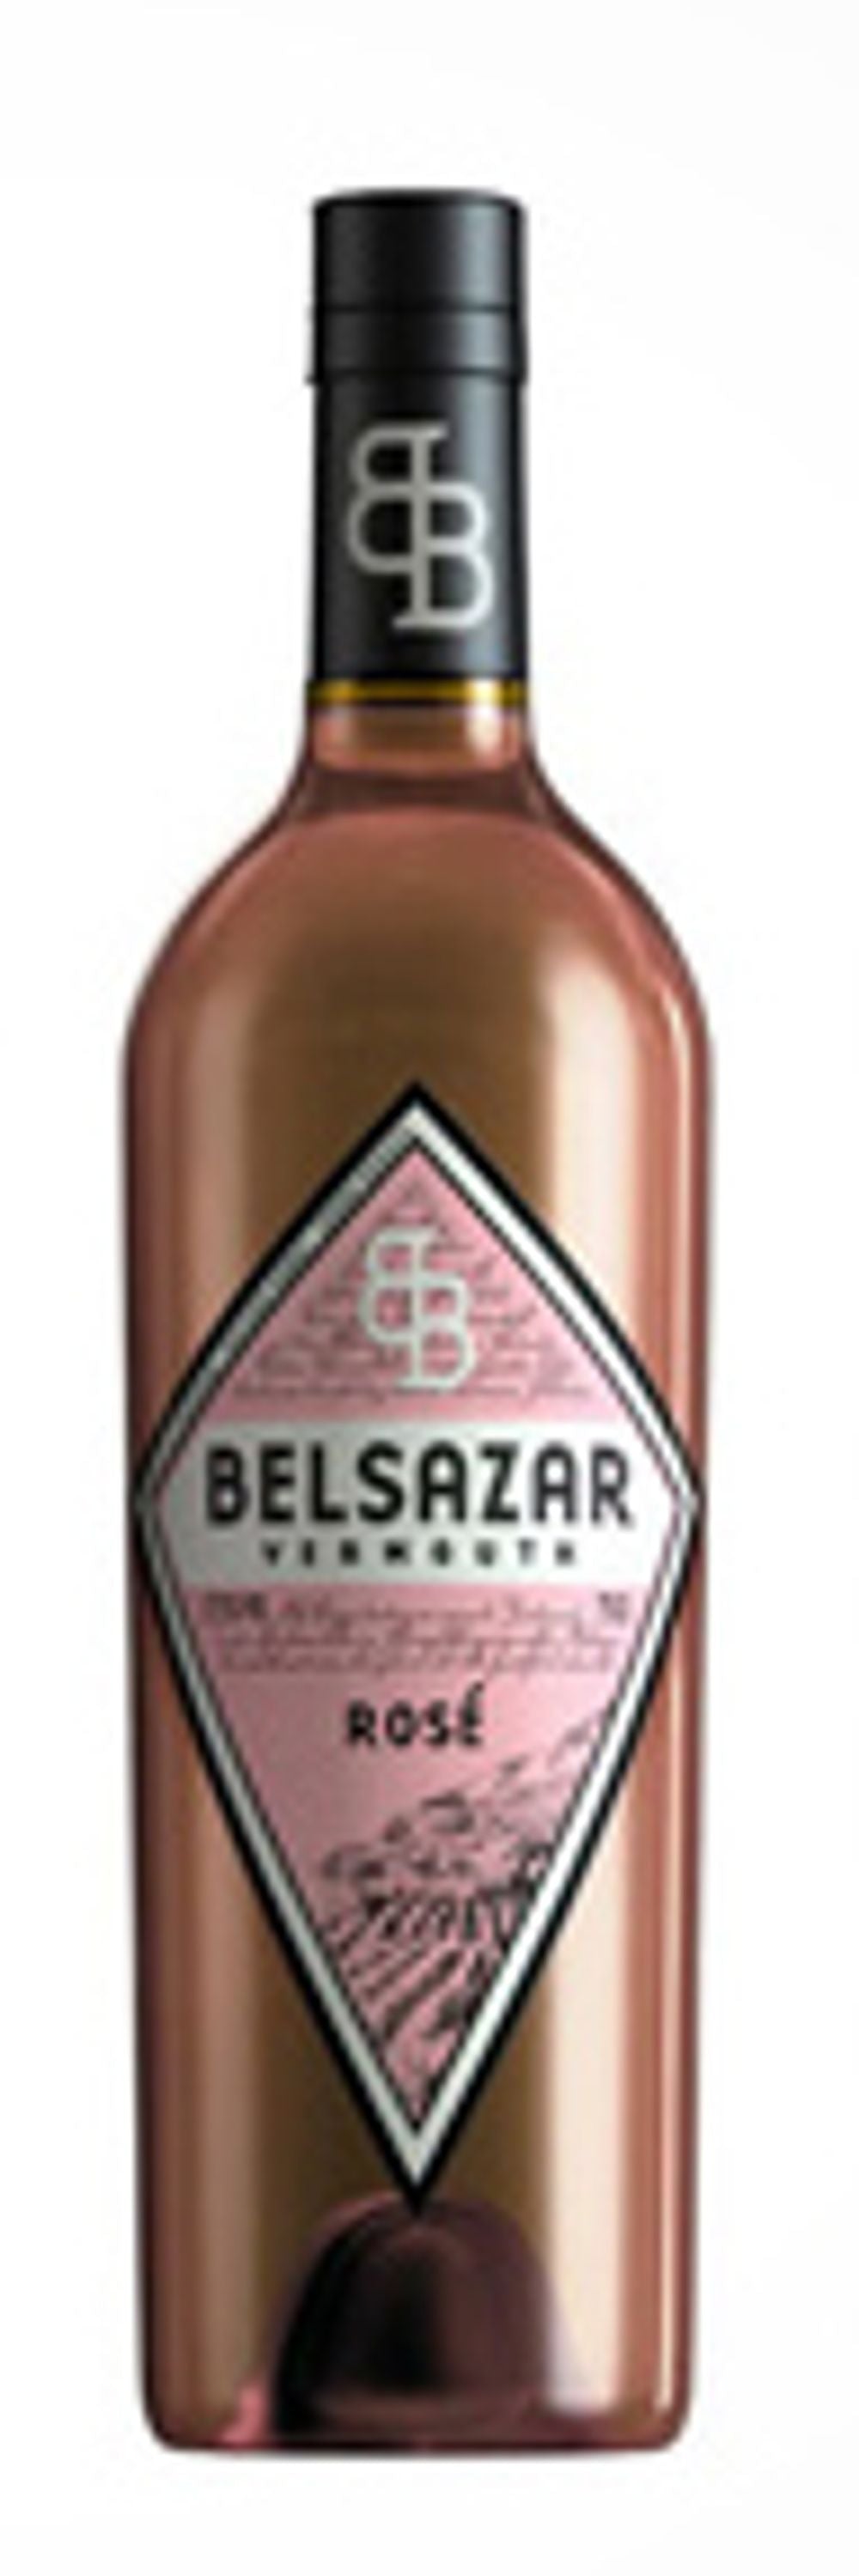 Belsazar Vermouth Rosé 0,7l, alc. 17,5 Vol.-%